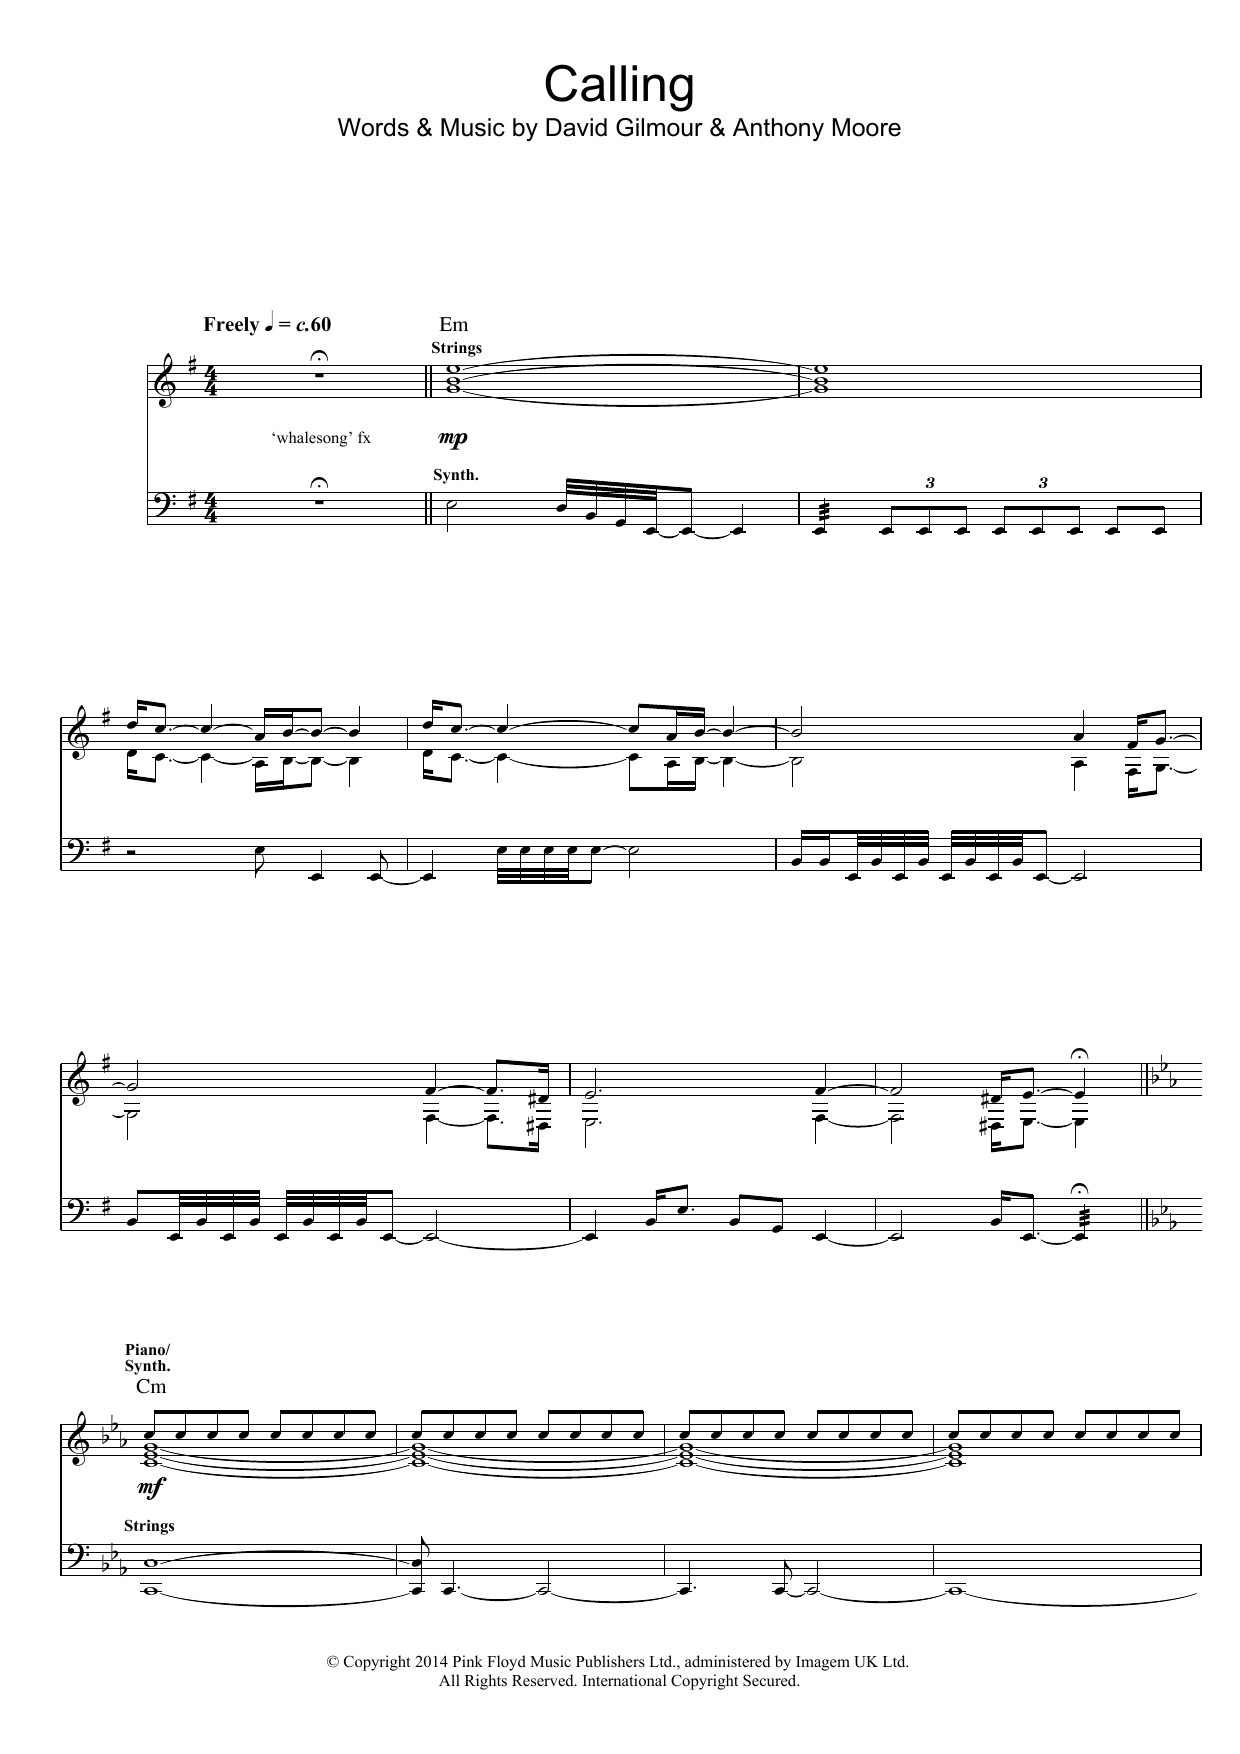 Pink Floyd Calling Sheet Music Notes & Chords for Guitar Tab - Download or Print PDF